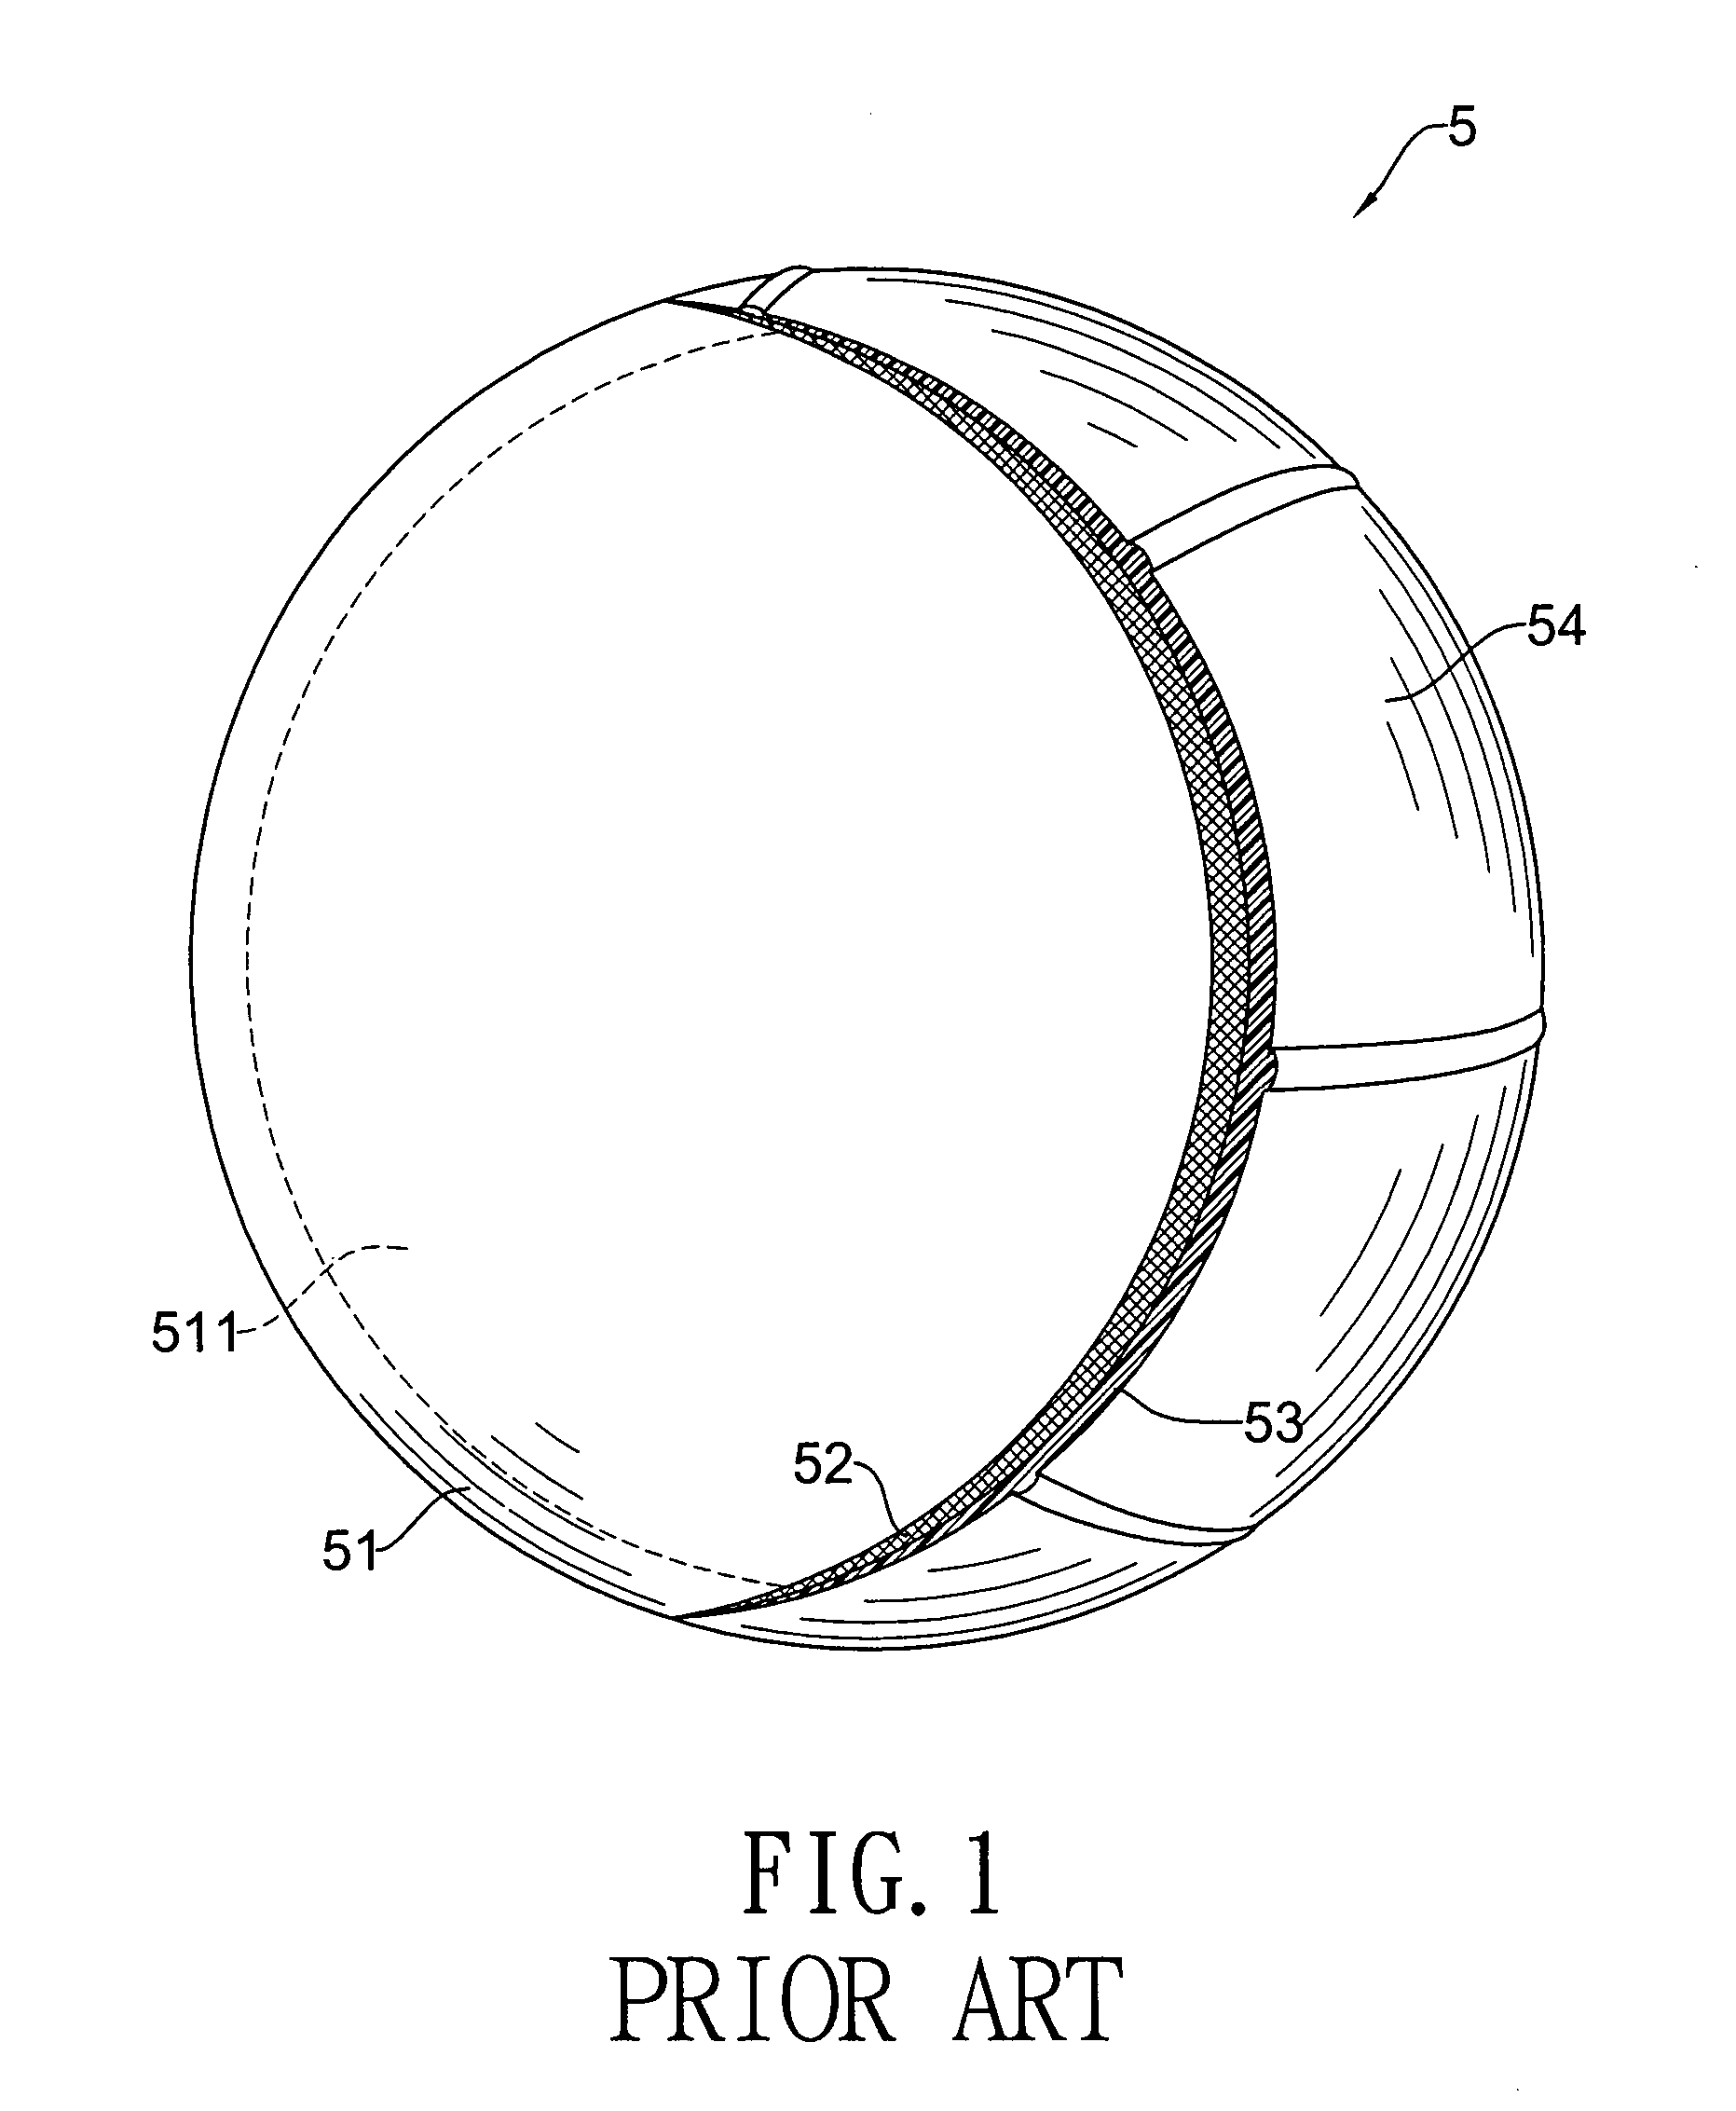 Airtight ball and a method of fabricating the airtight ball